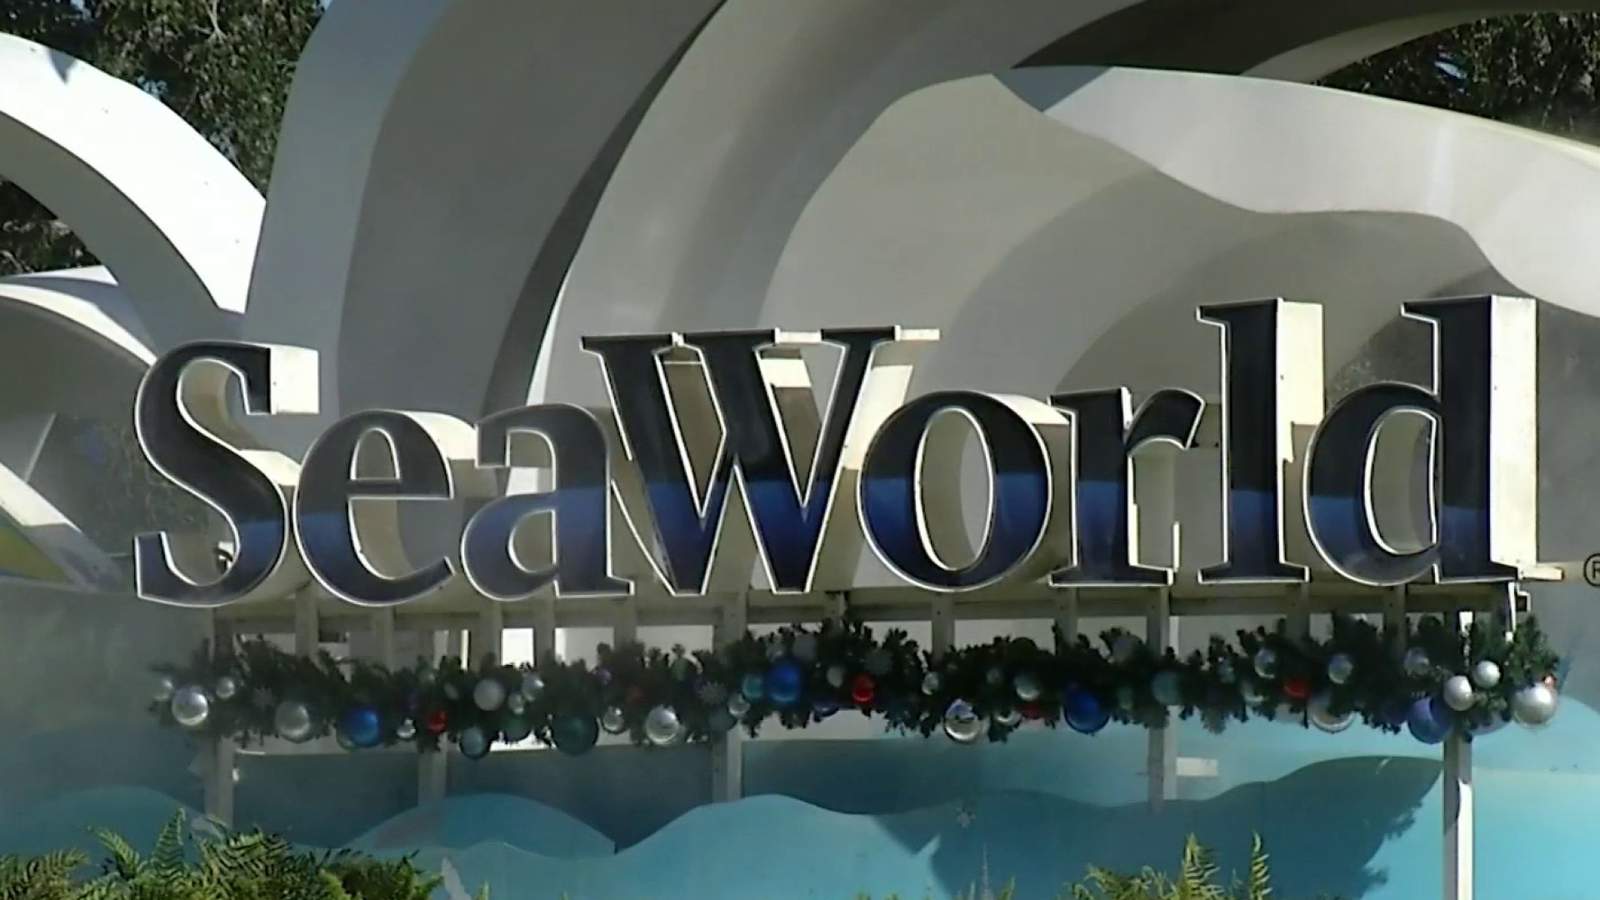 SeaWorld settles class action lawsuit over ‘Blackfish’ for $65 million